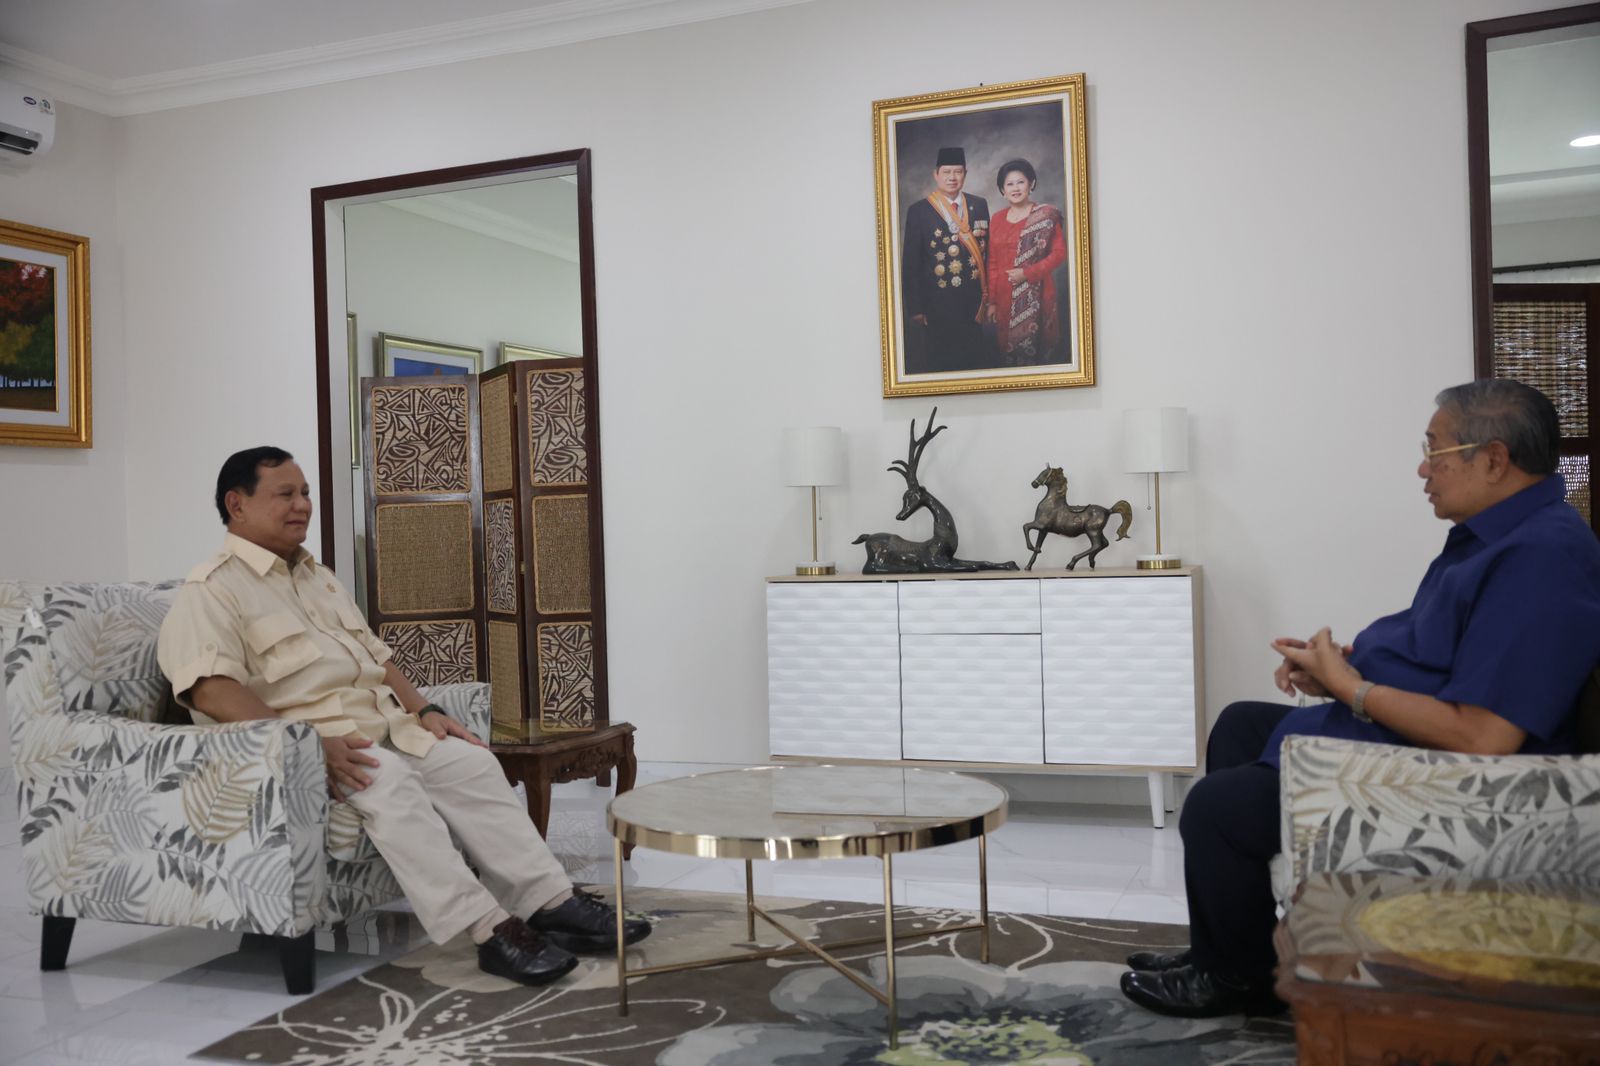 Ketua Umum Partai Gerindra Prabowo Subianto bertemu Majelis Tinggi Partai Demokrat Susilo Bambang Yudhoyono (SBY) di Pacitan hanya bersilaturahmi dan halal bihalal (Ashar/SinPo.id)